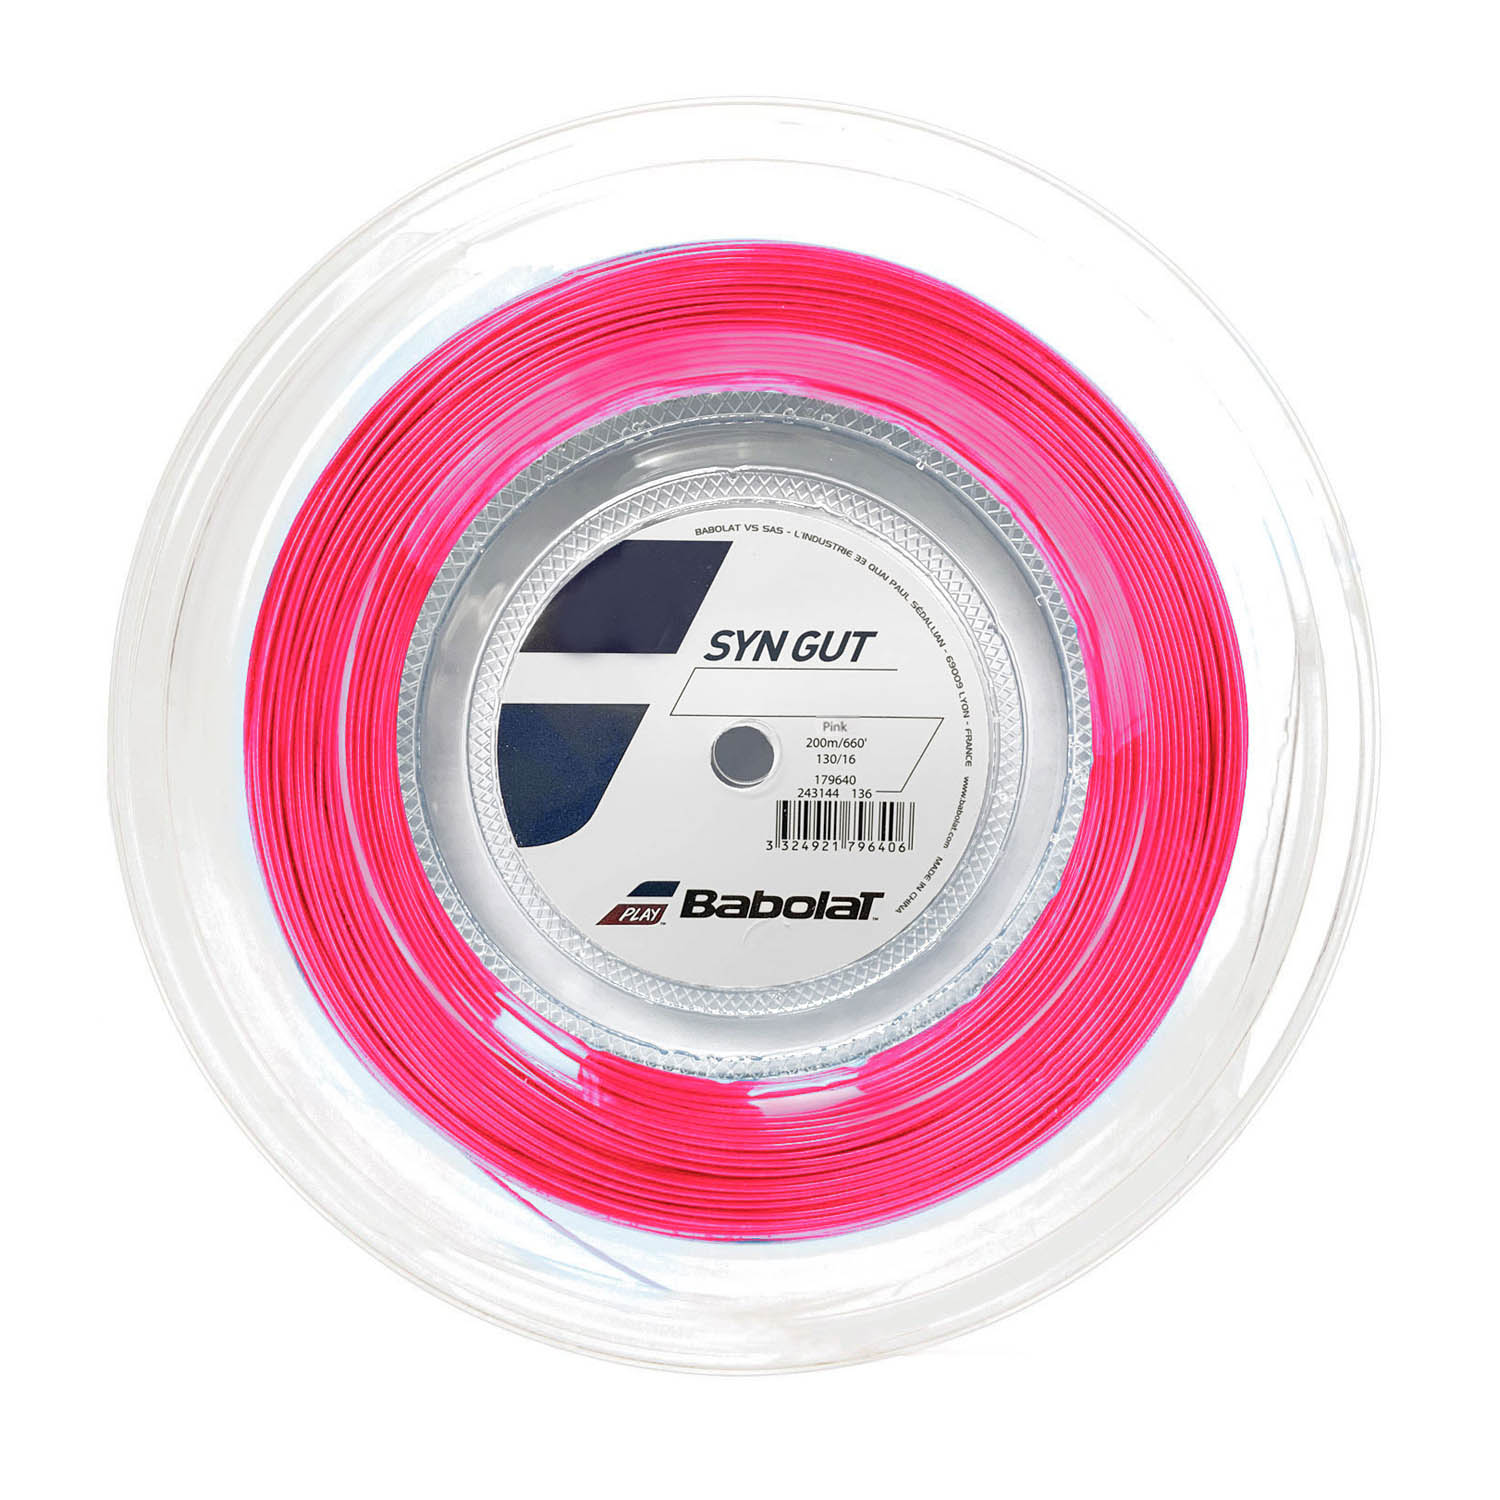 Babolat Syn Gut 1.30 String Reel 200 m - Pink